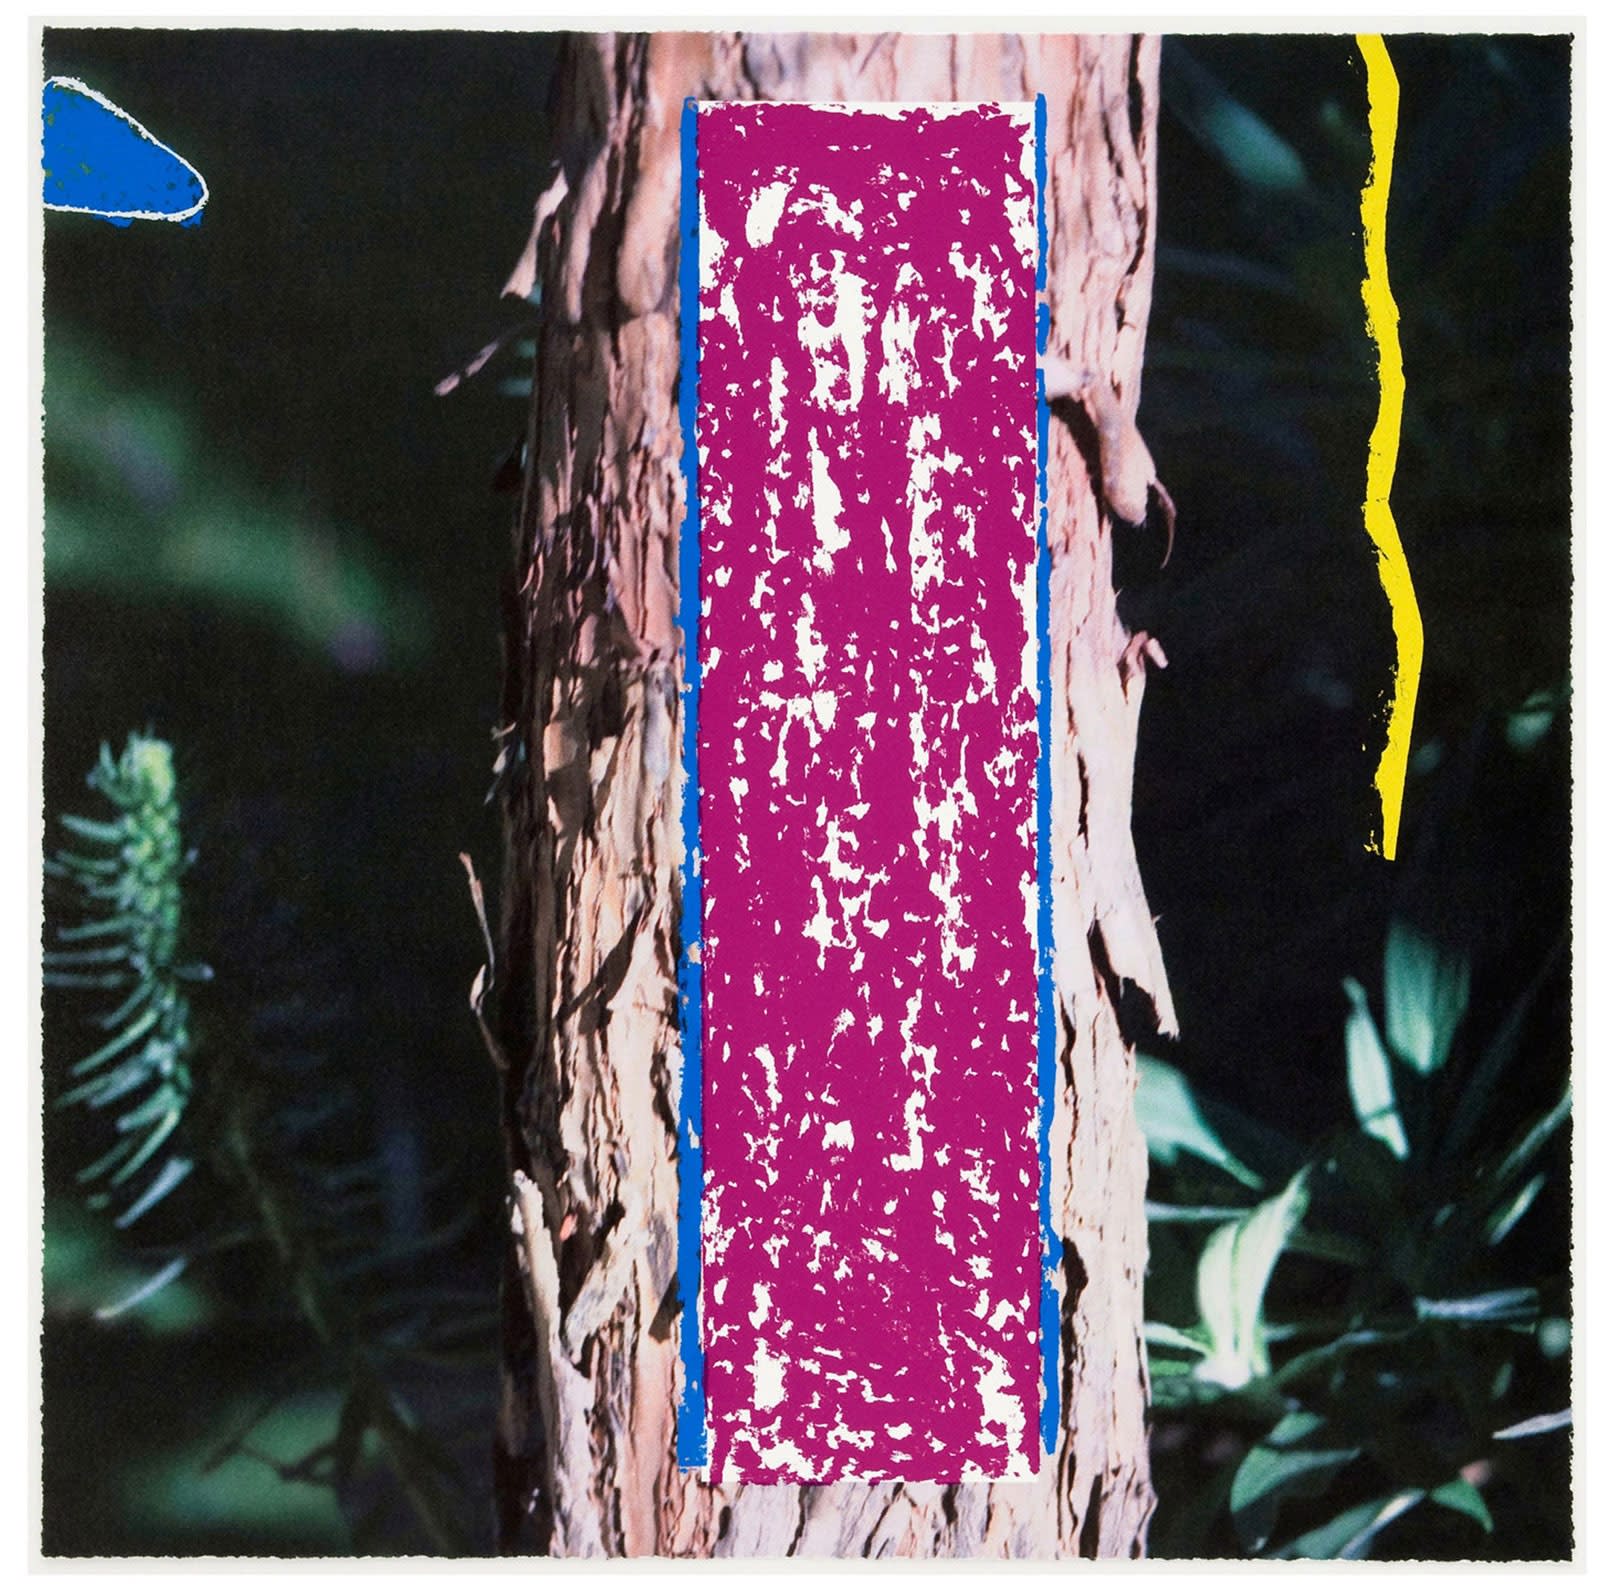 John Baldessari 2326 Third Street, Santa Monica Lithographie couleur avec impression sérigraphique 69,6 x 69,6 cm Dim. papier: 69,6 x 69,6 cm